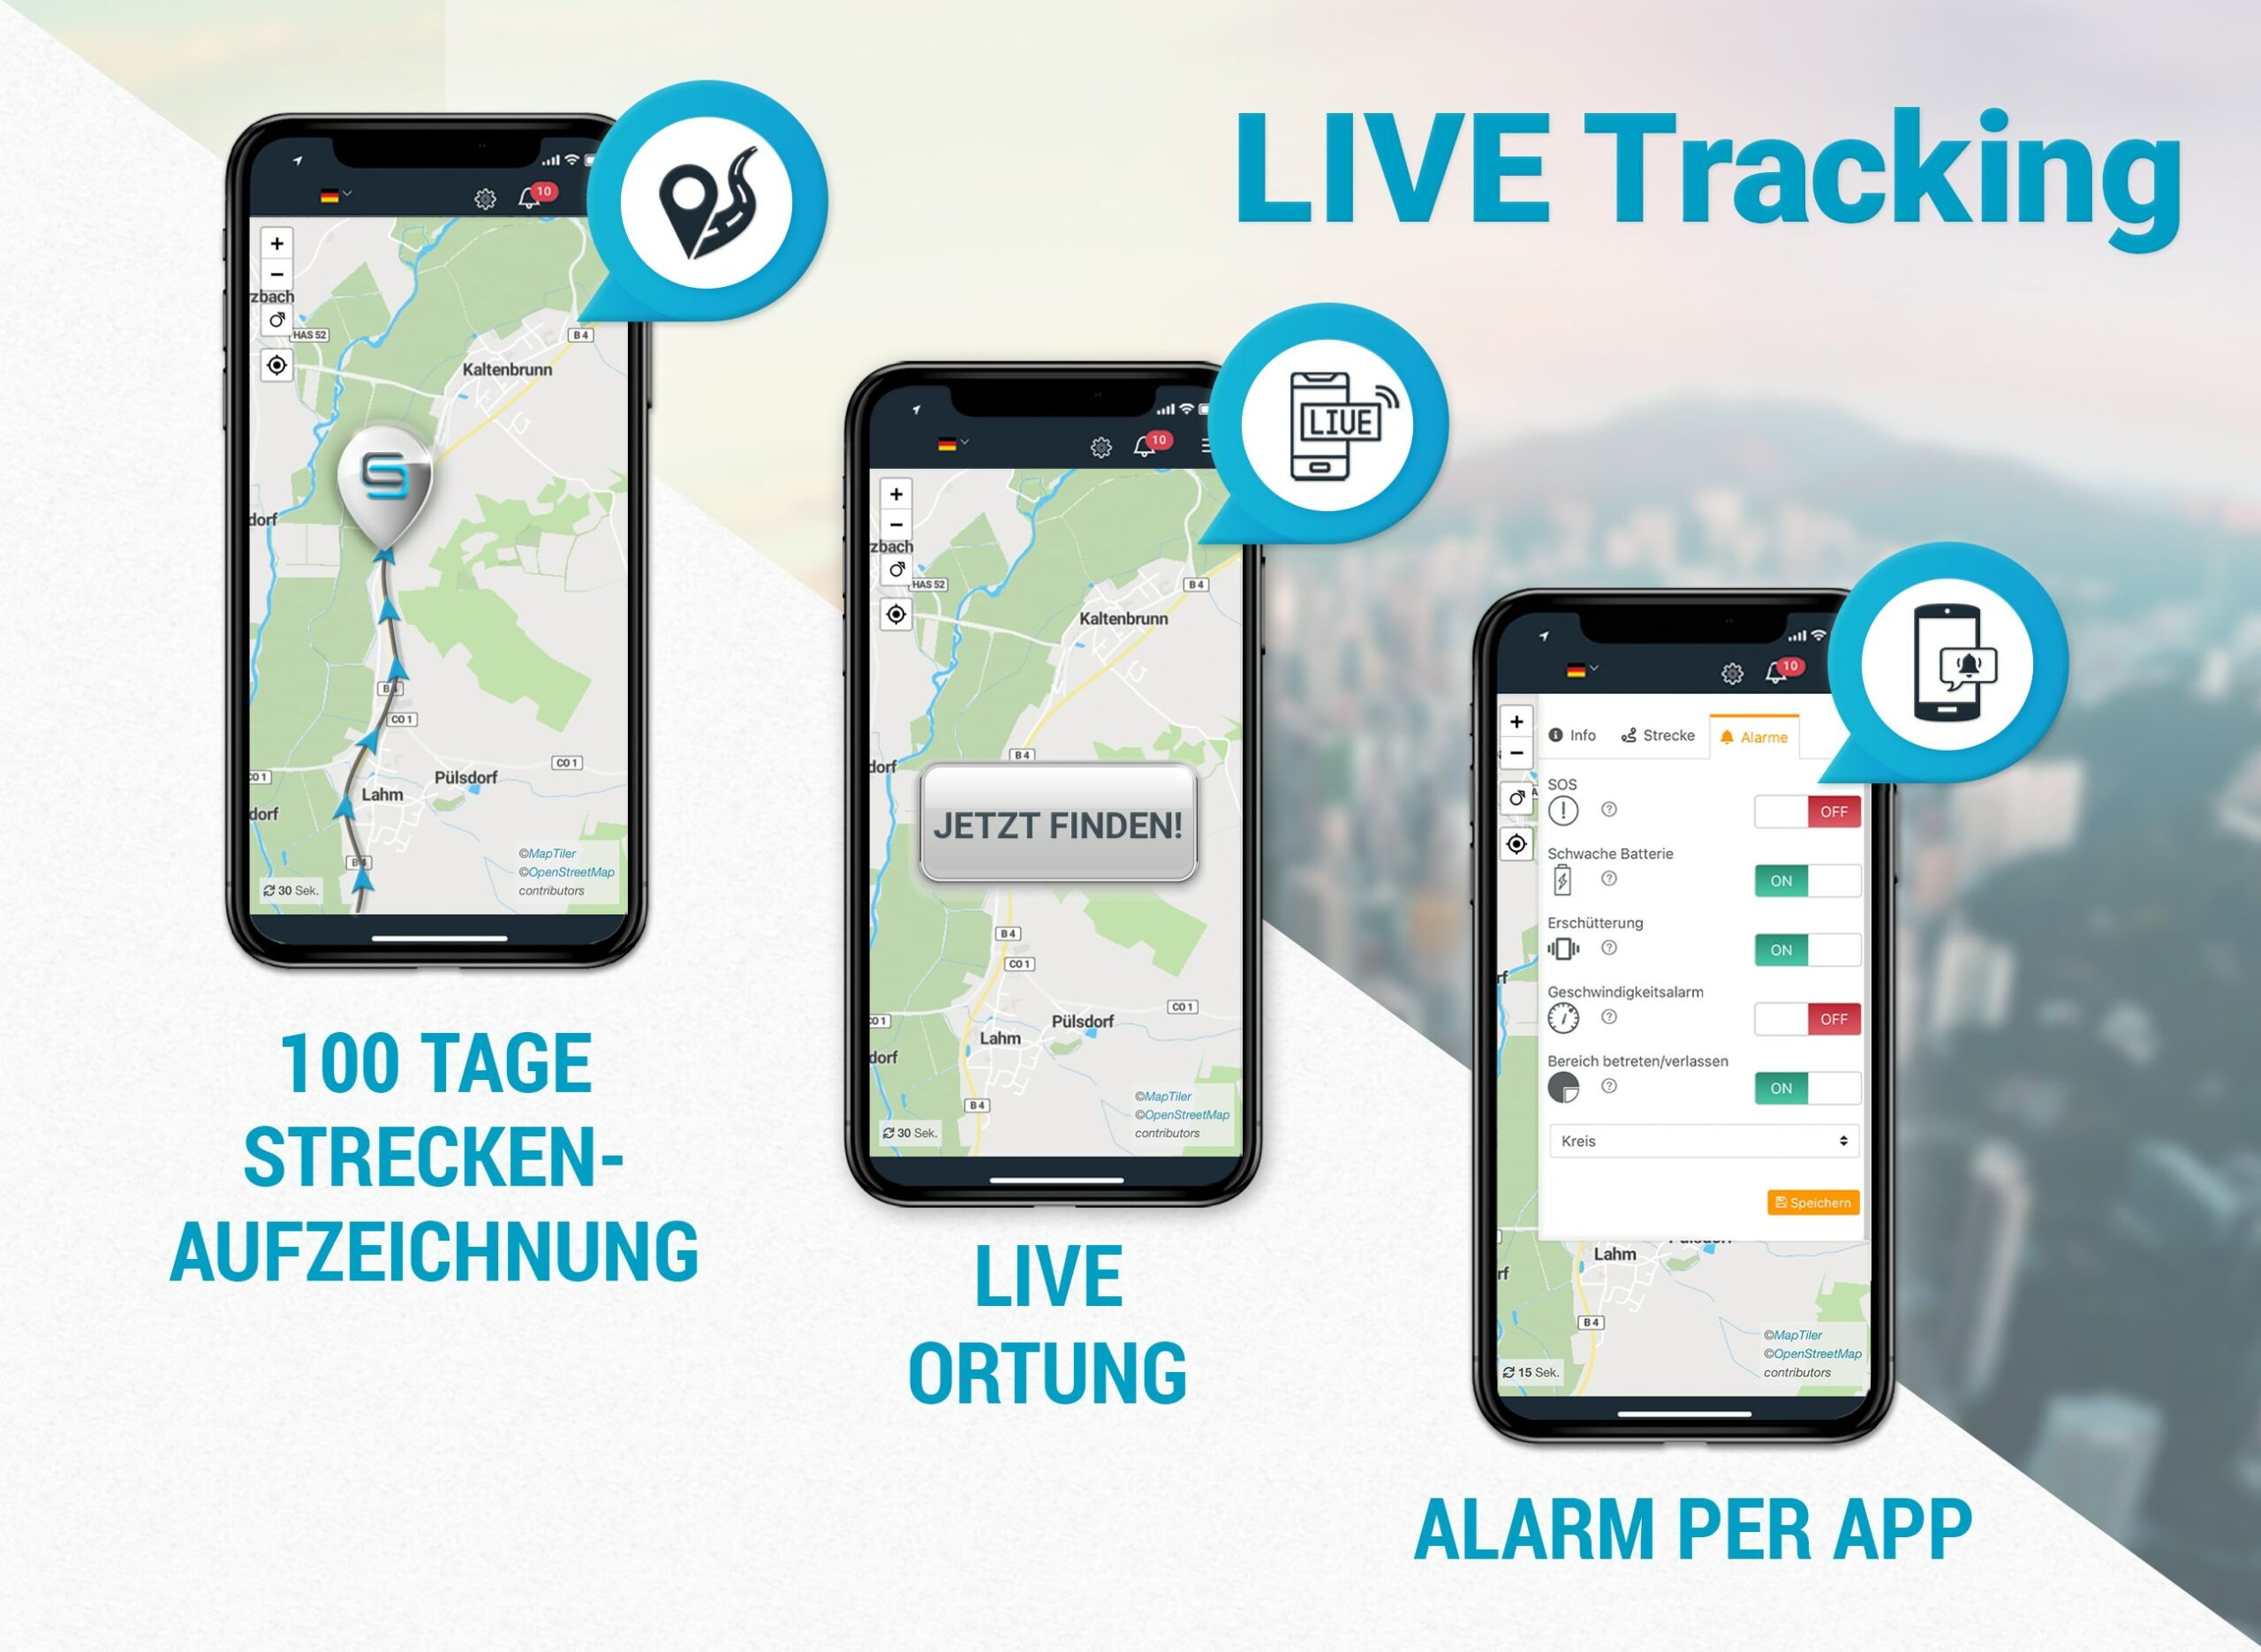 salind tracker 01 Live Tracking min scaled - salind-tracker-01-Live Tracking-min